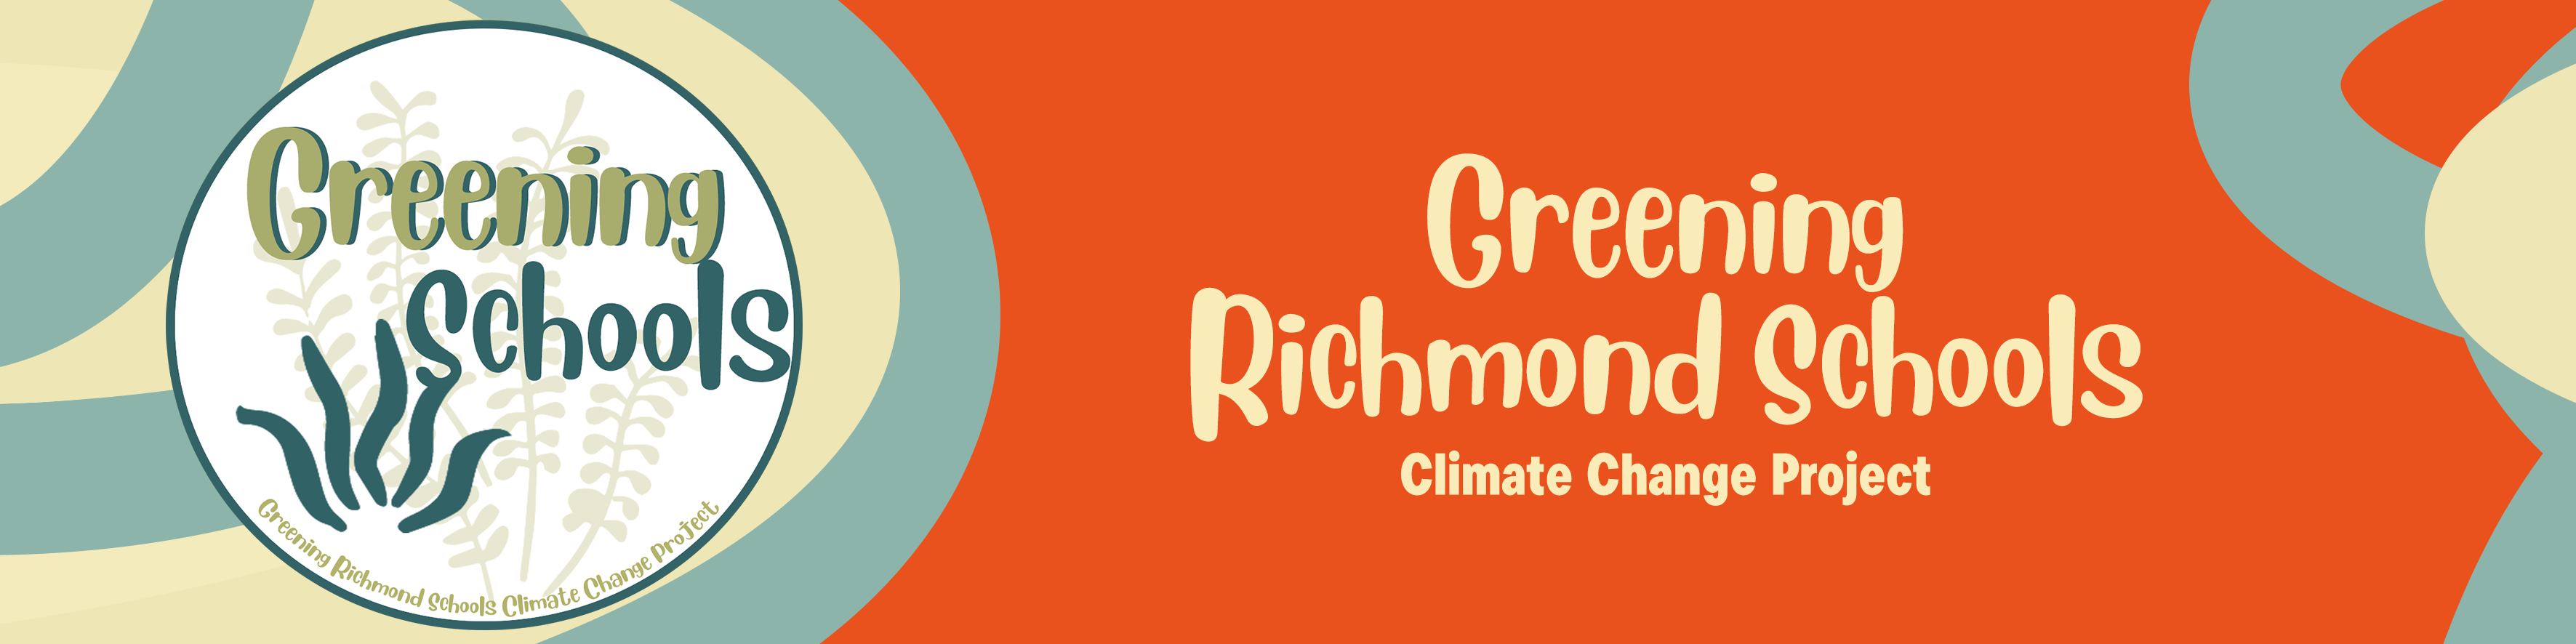 greening_richmond_schools_header.png